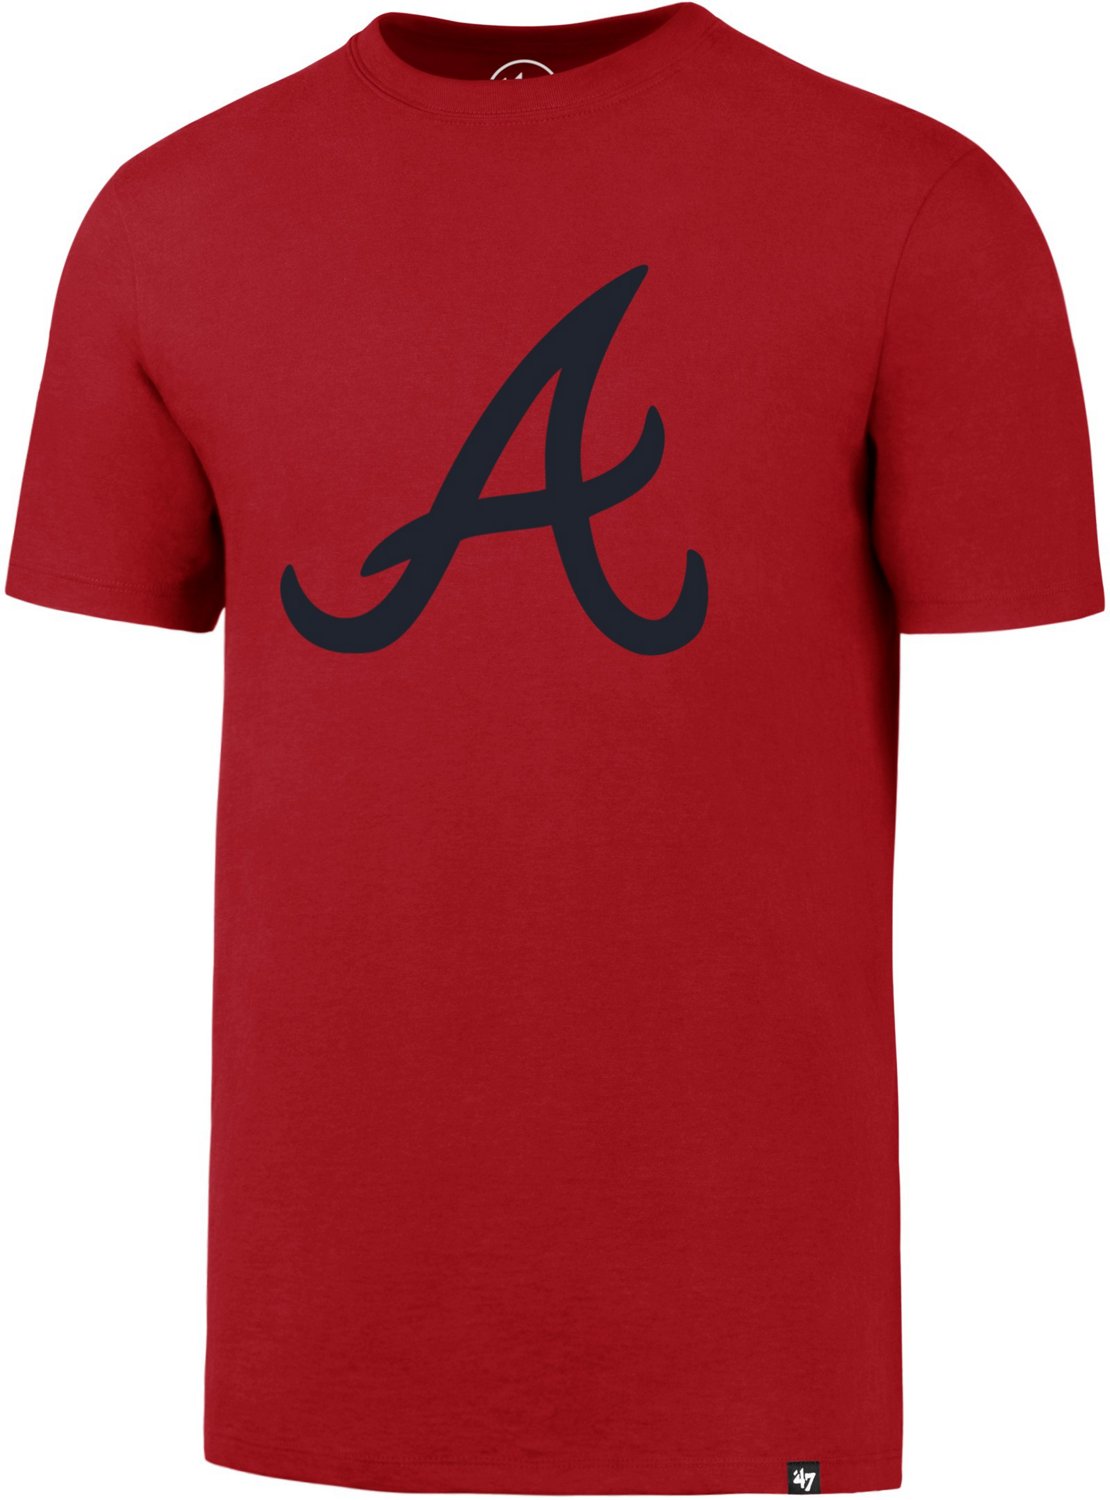 '47 Atlanta Braves Imprint Logo T-shirt | Academy